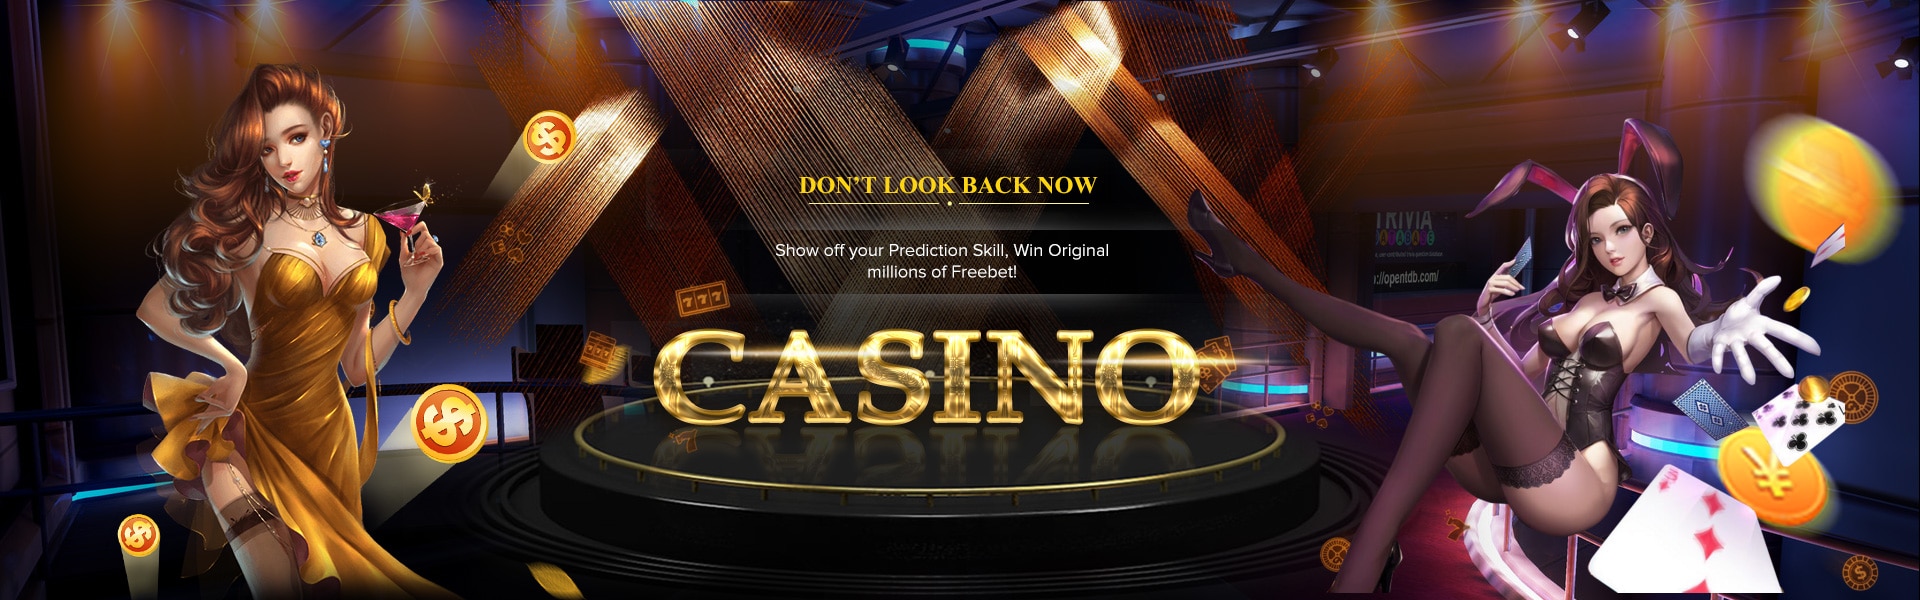 Online pavilion casino 88 Dewi Casino